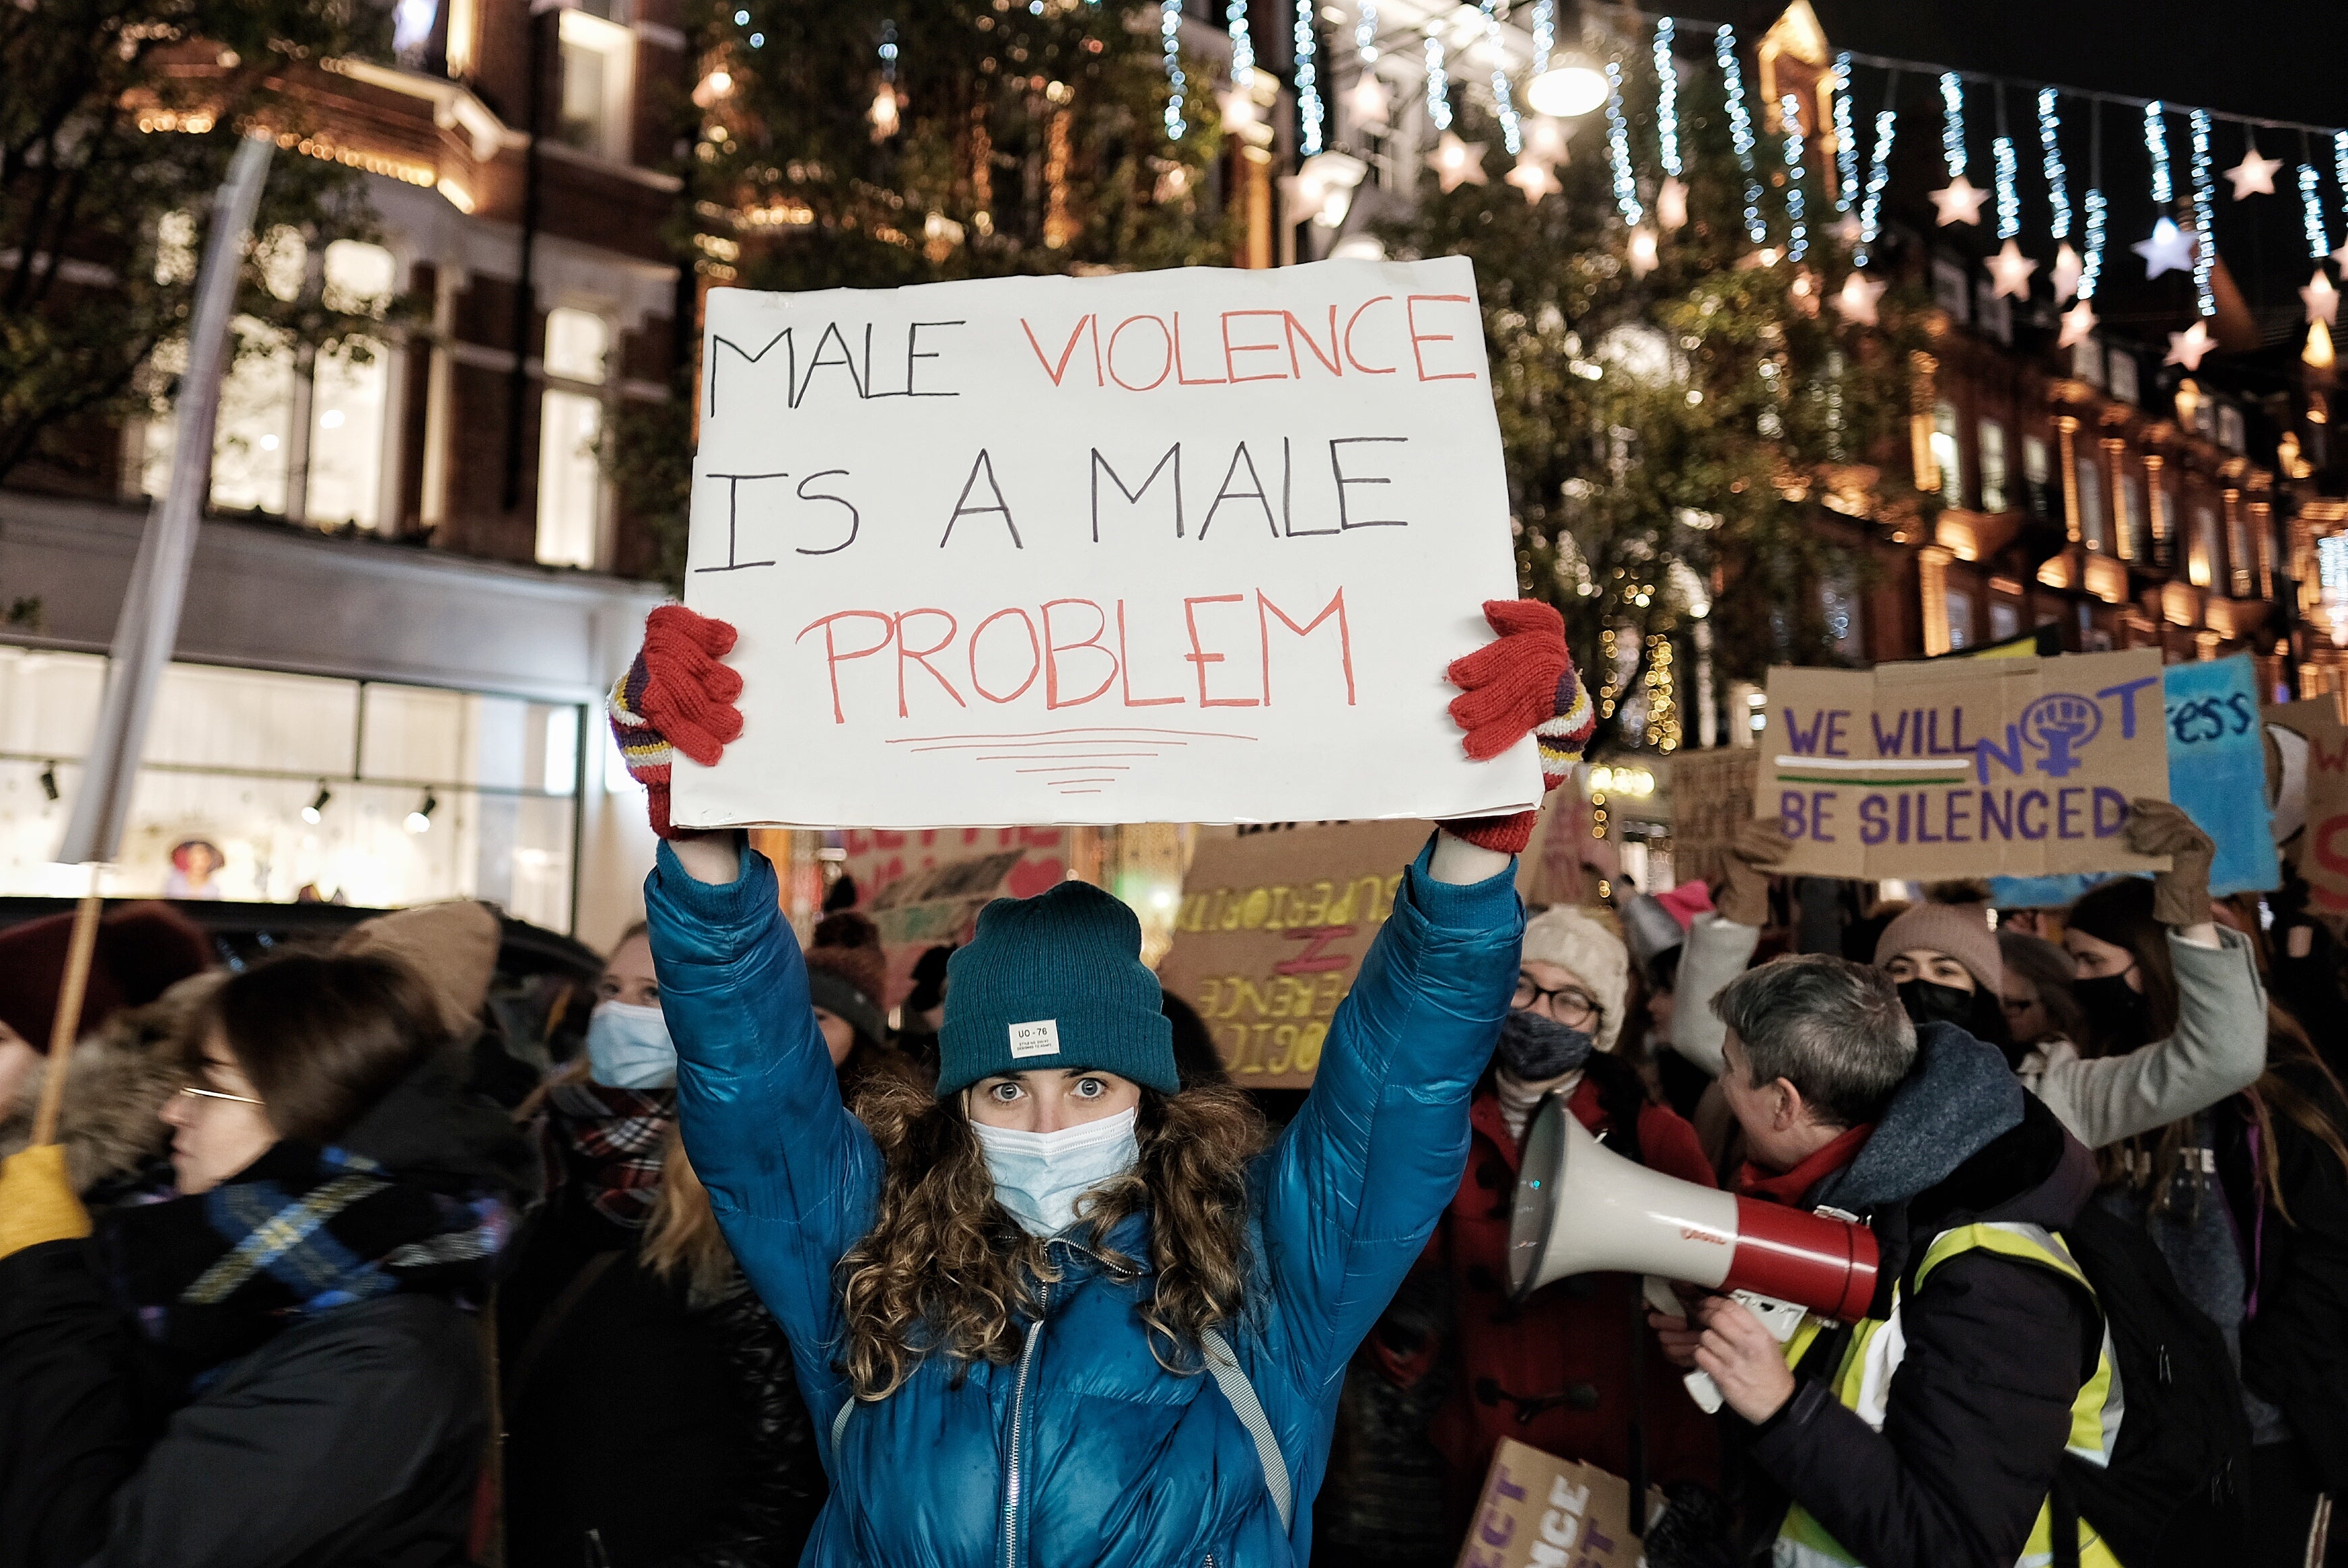 Protests were sparked across the UK against gender-based violence after the murder of Sarah Everard